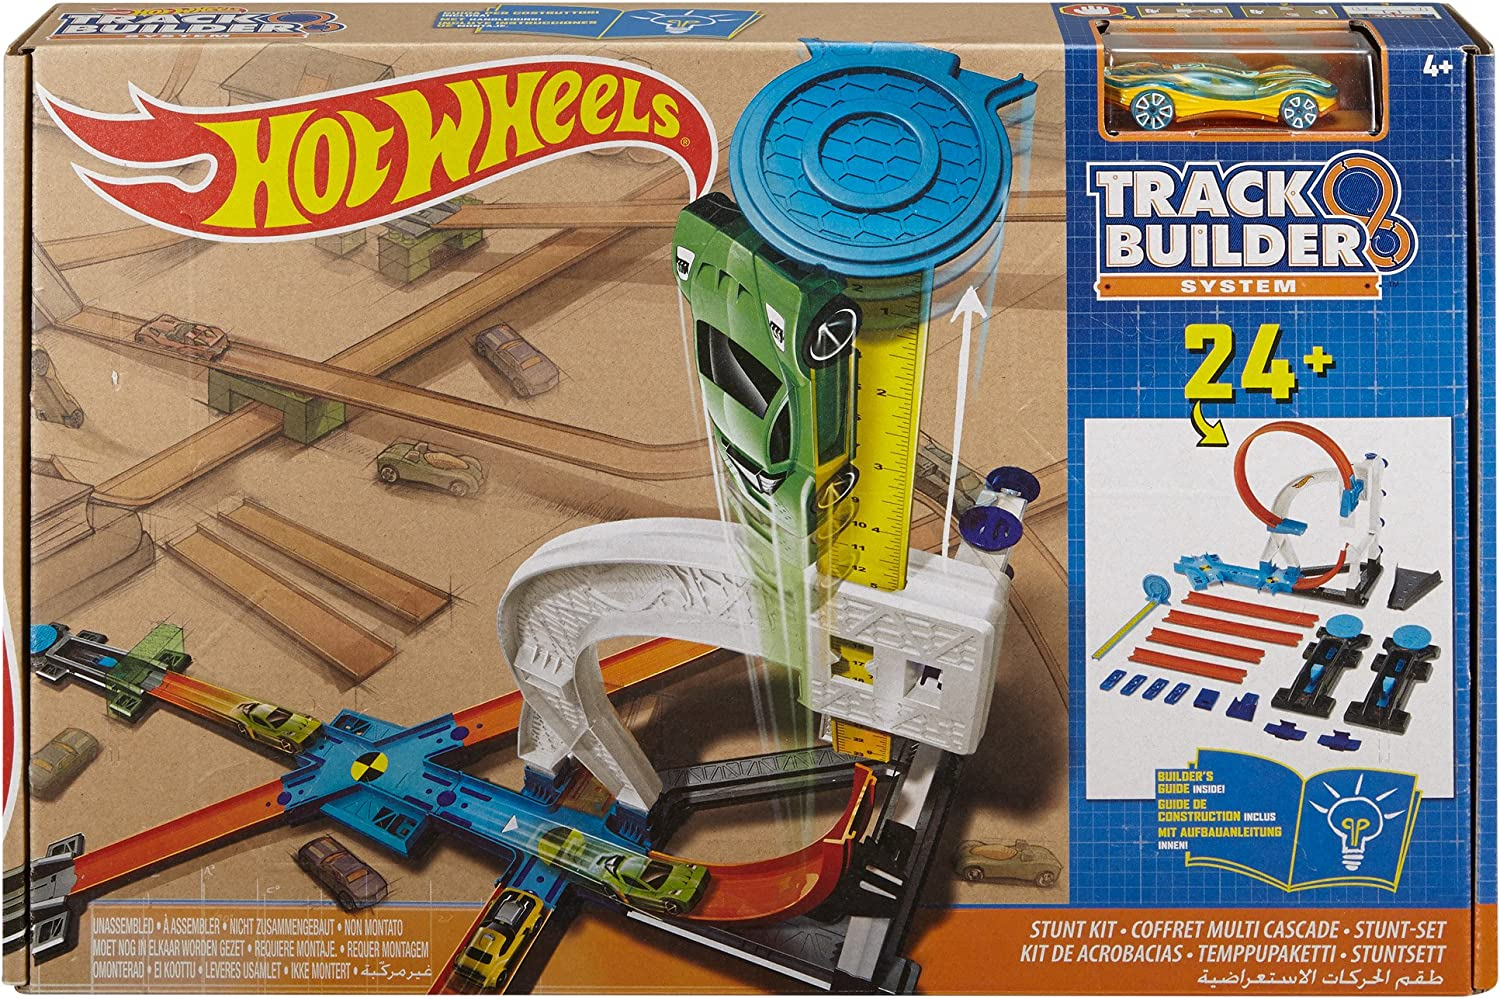 Tracks builder. Хот Вилс track Builder System. Hot Wheels dlf28. Мертвая петля хот Вилс детский. Хот ВТЛЗ треки с мёртвой петлёй.